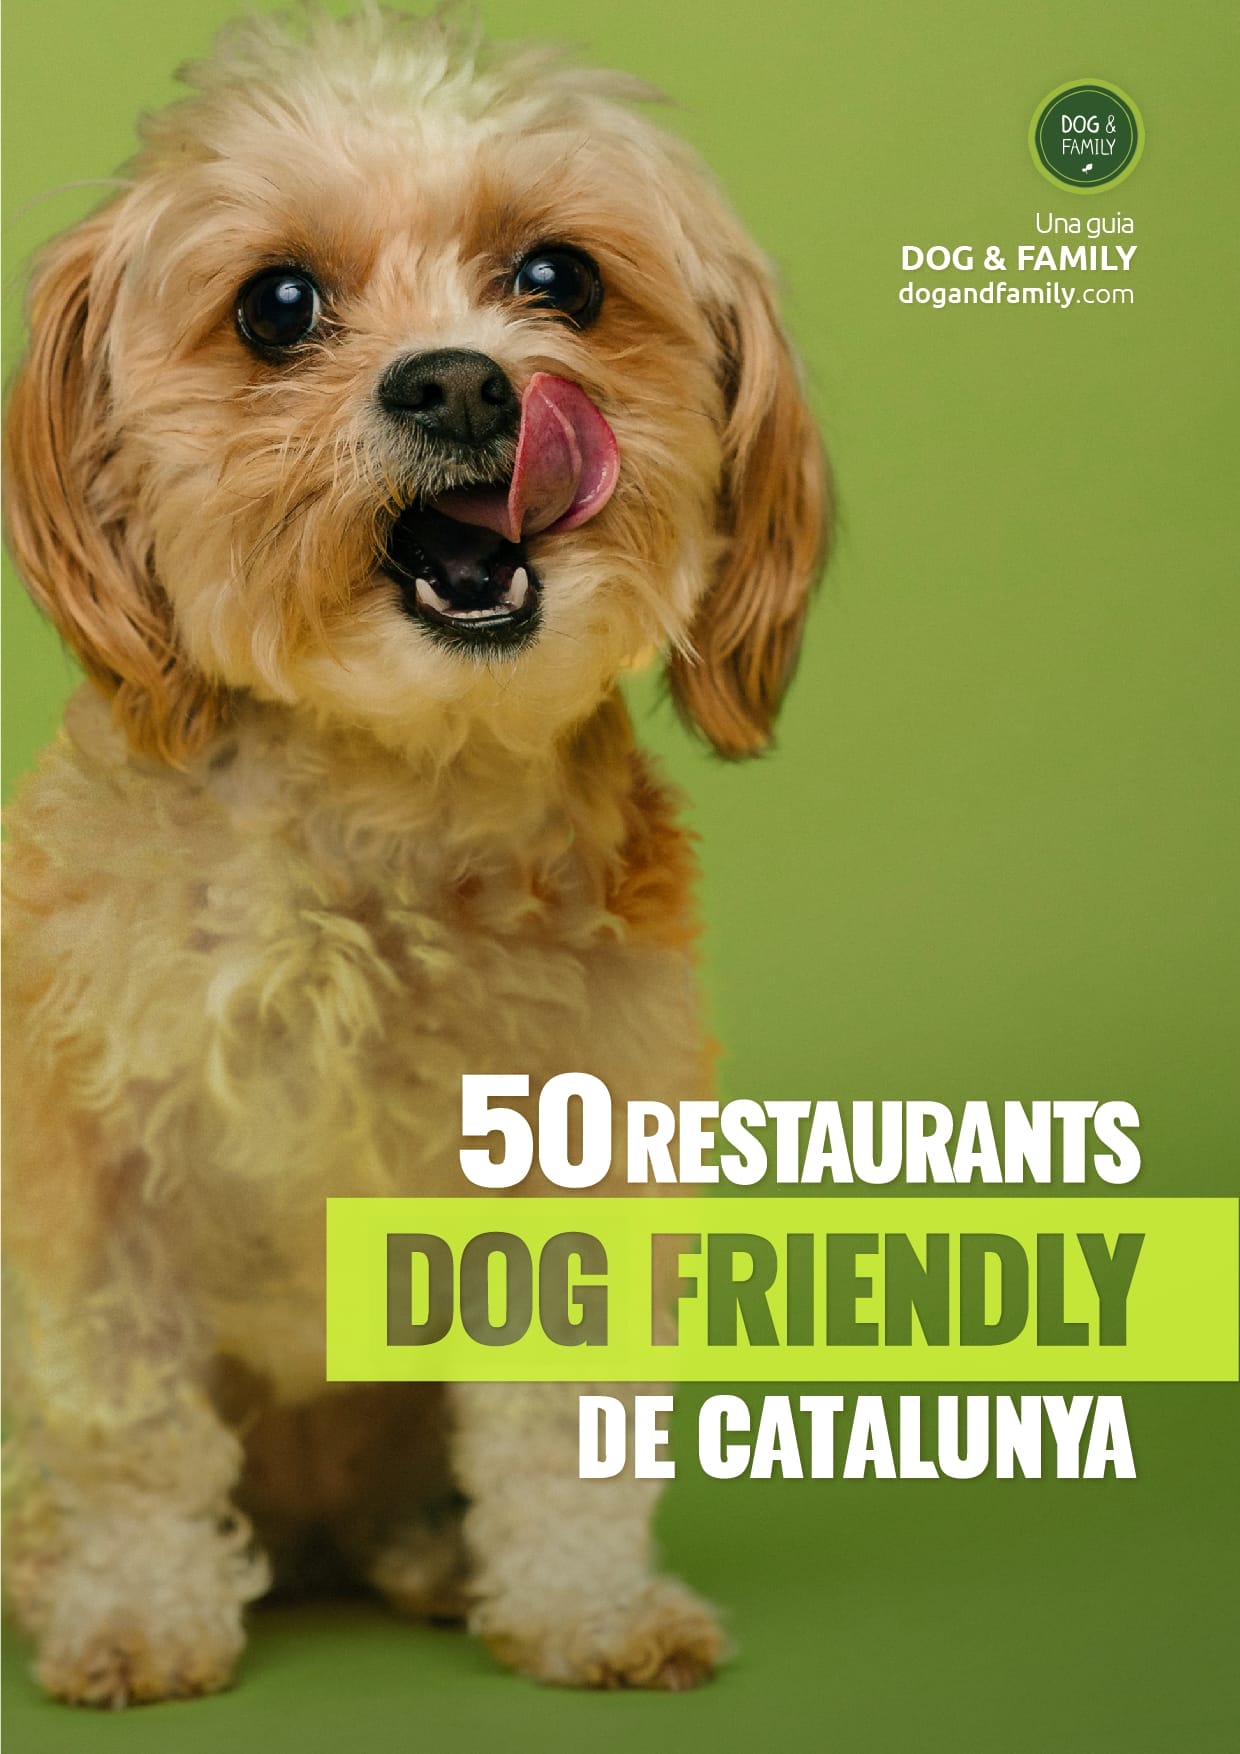 Guia de 50 restaurants dog friendly de Cataluña